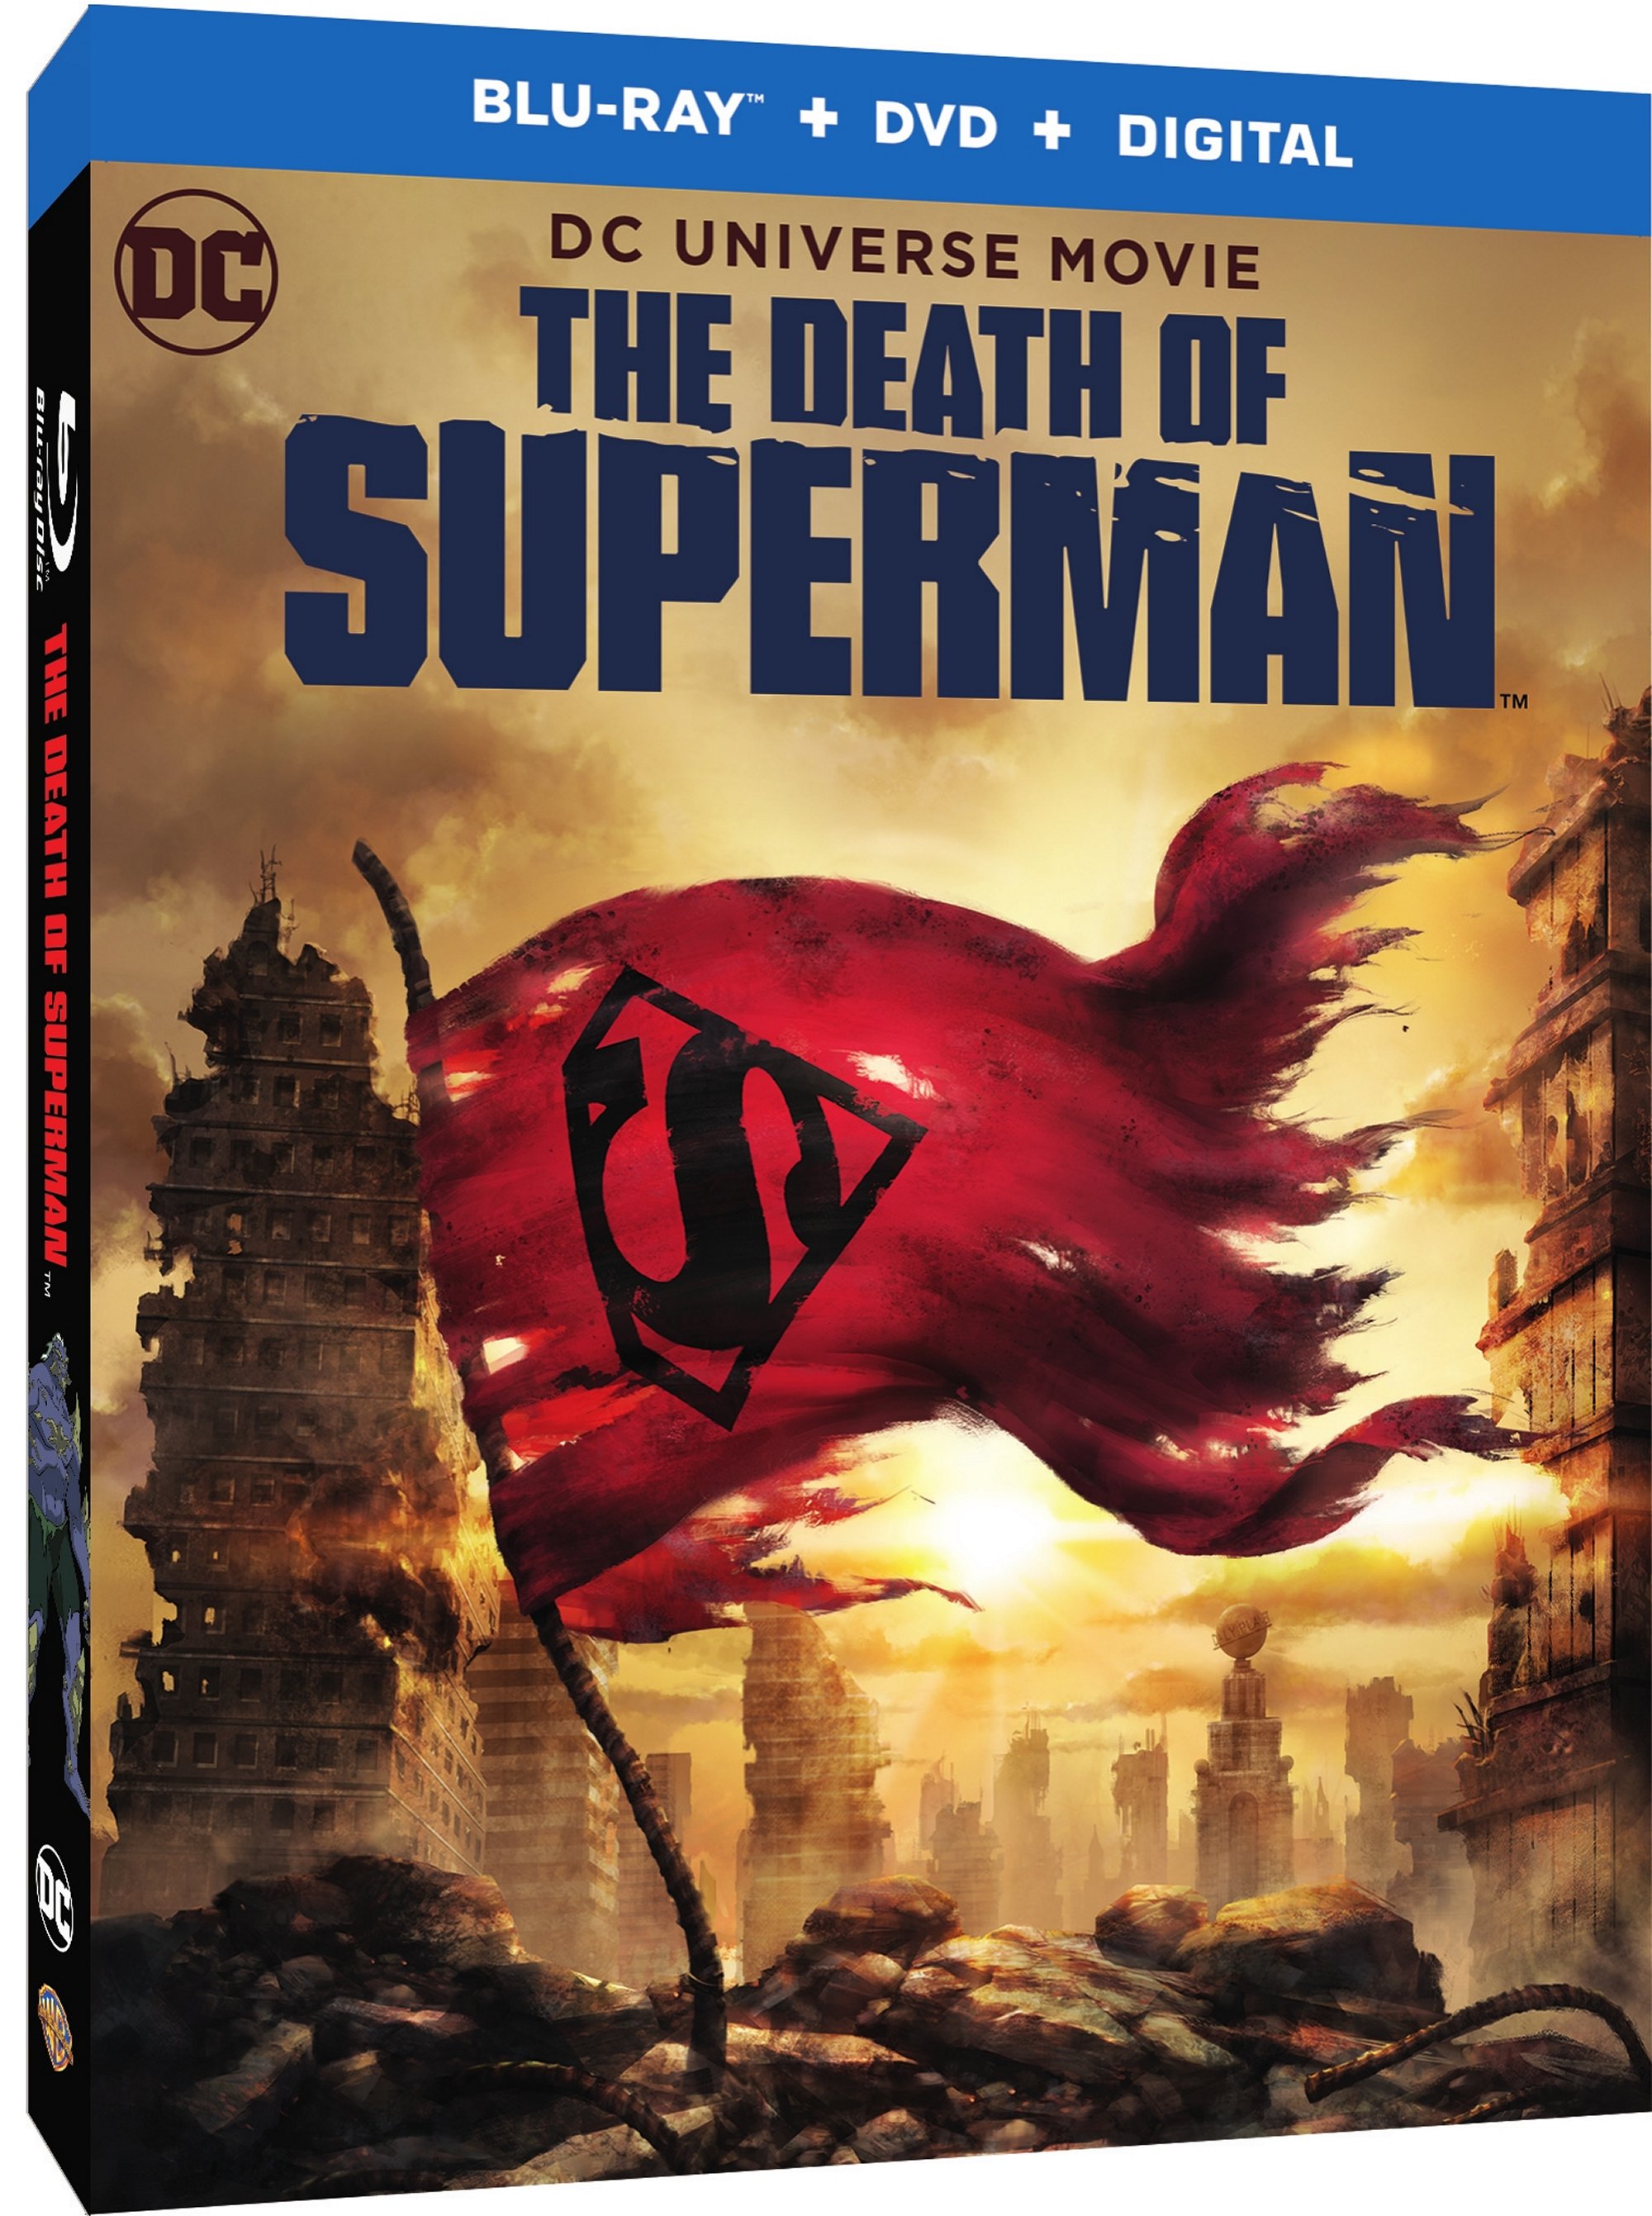 WBHE Announces: The Death of Superman